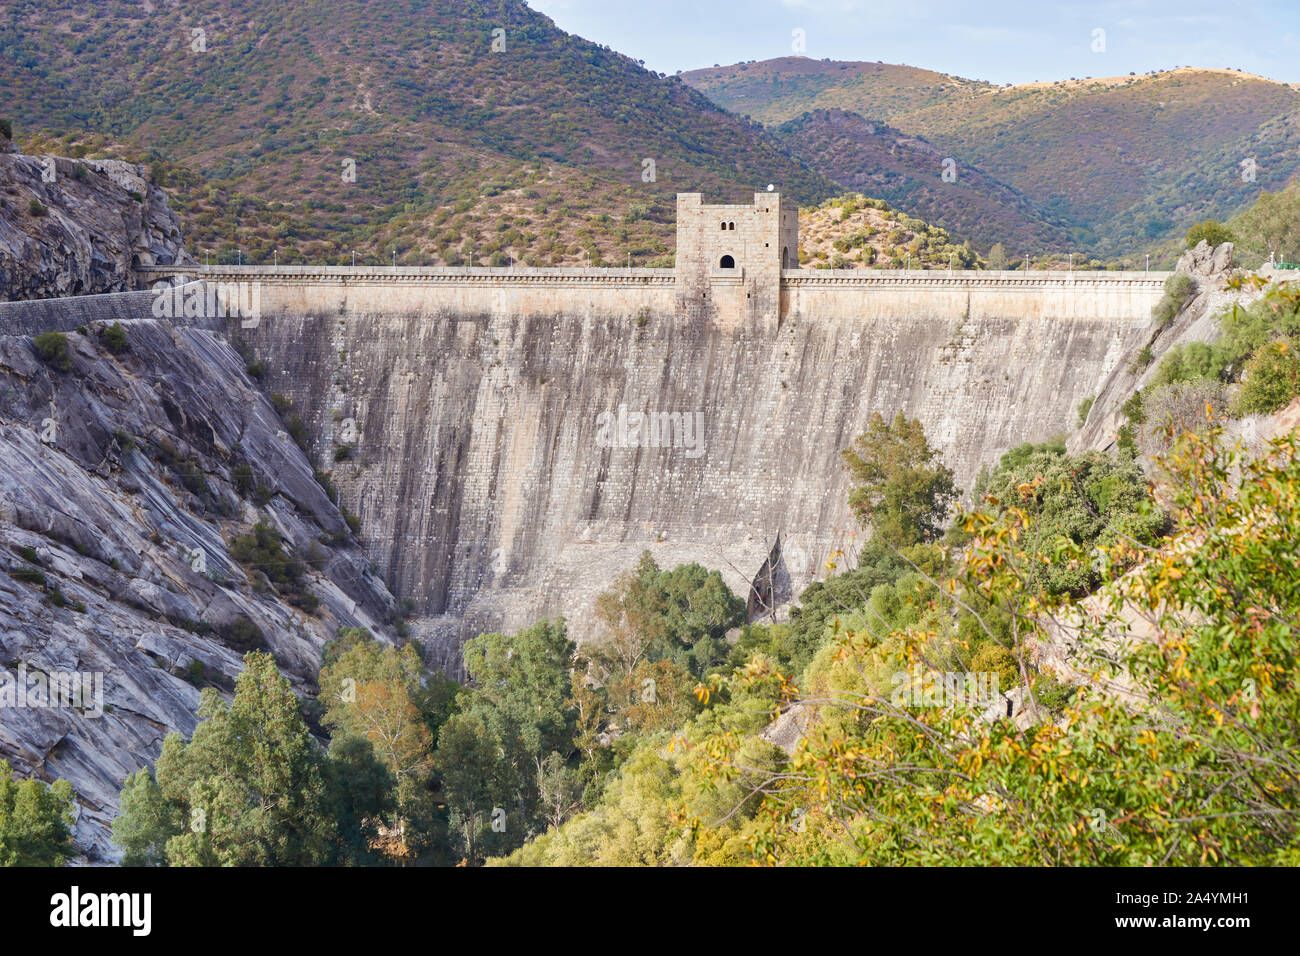 Dam of the Jandula reservoir in the natural park of Andujar, Jaen. Spain Stock Photo